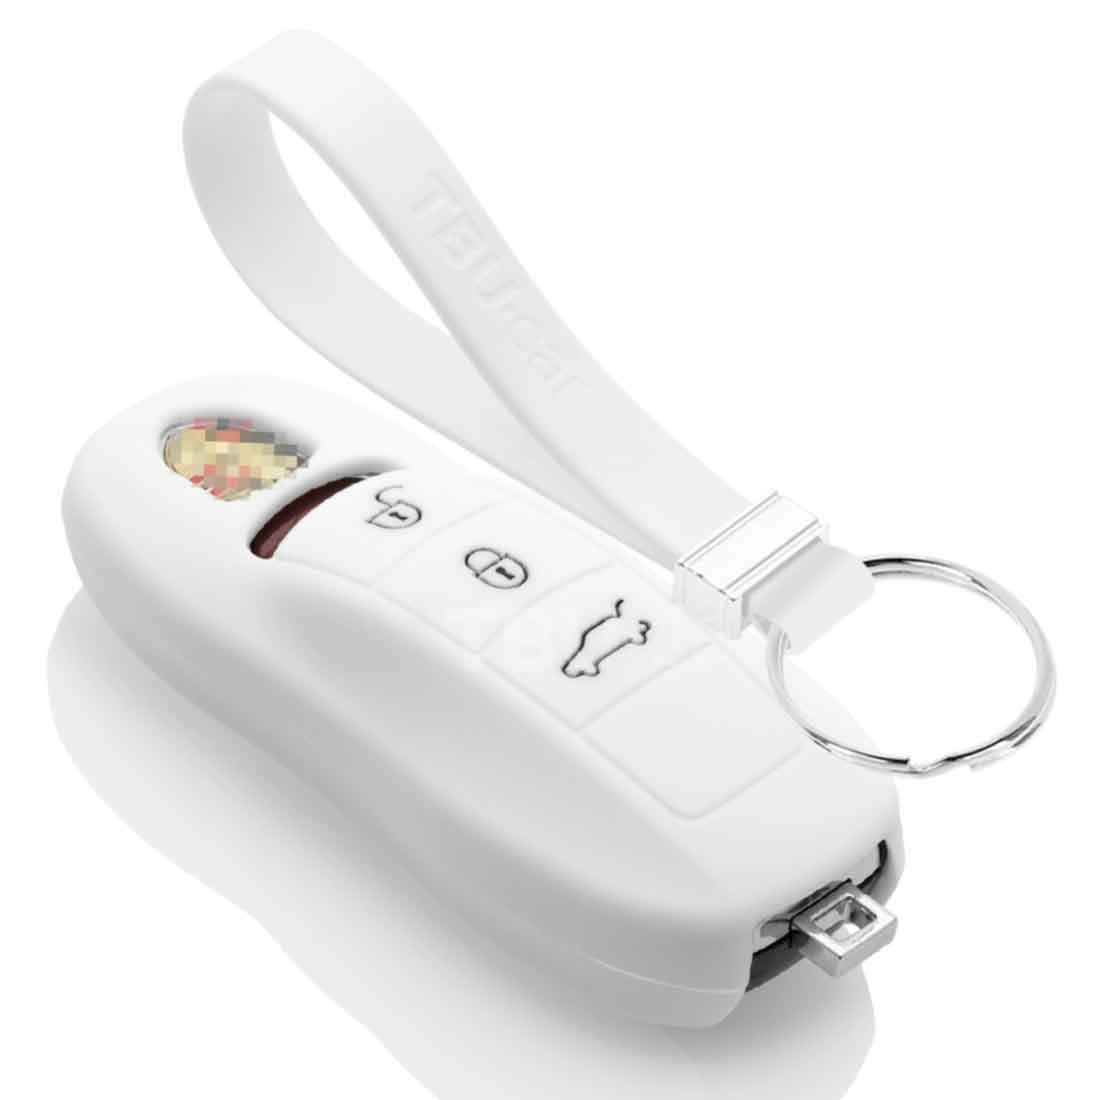 TBU car TBU car Car key cover compatible with Porsche - Silicone Protective Remote Key Shell - FOB Case Cover - White